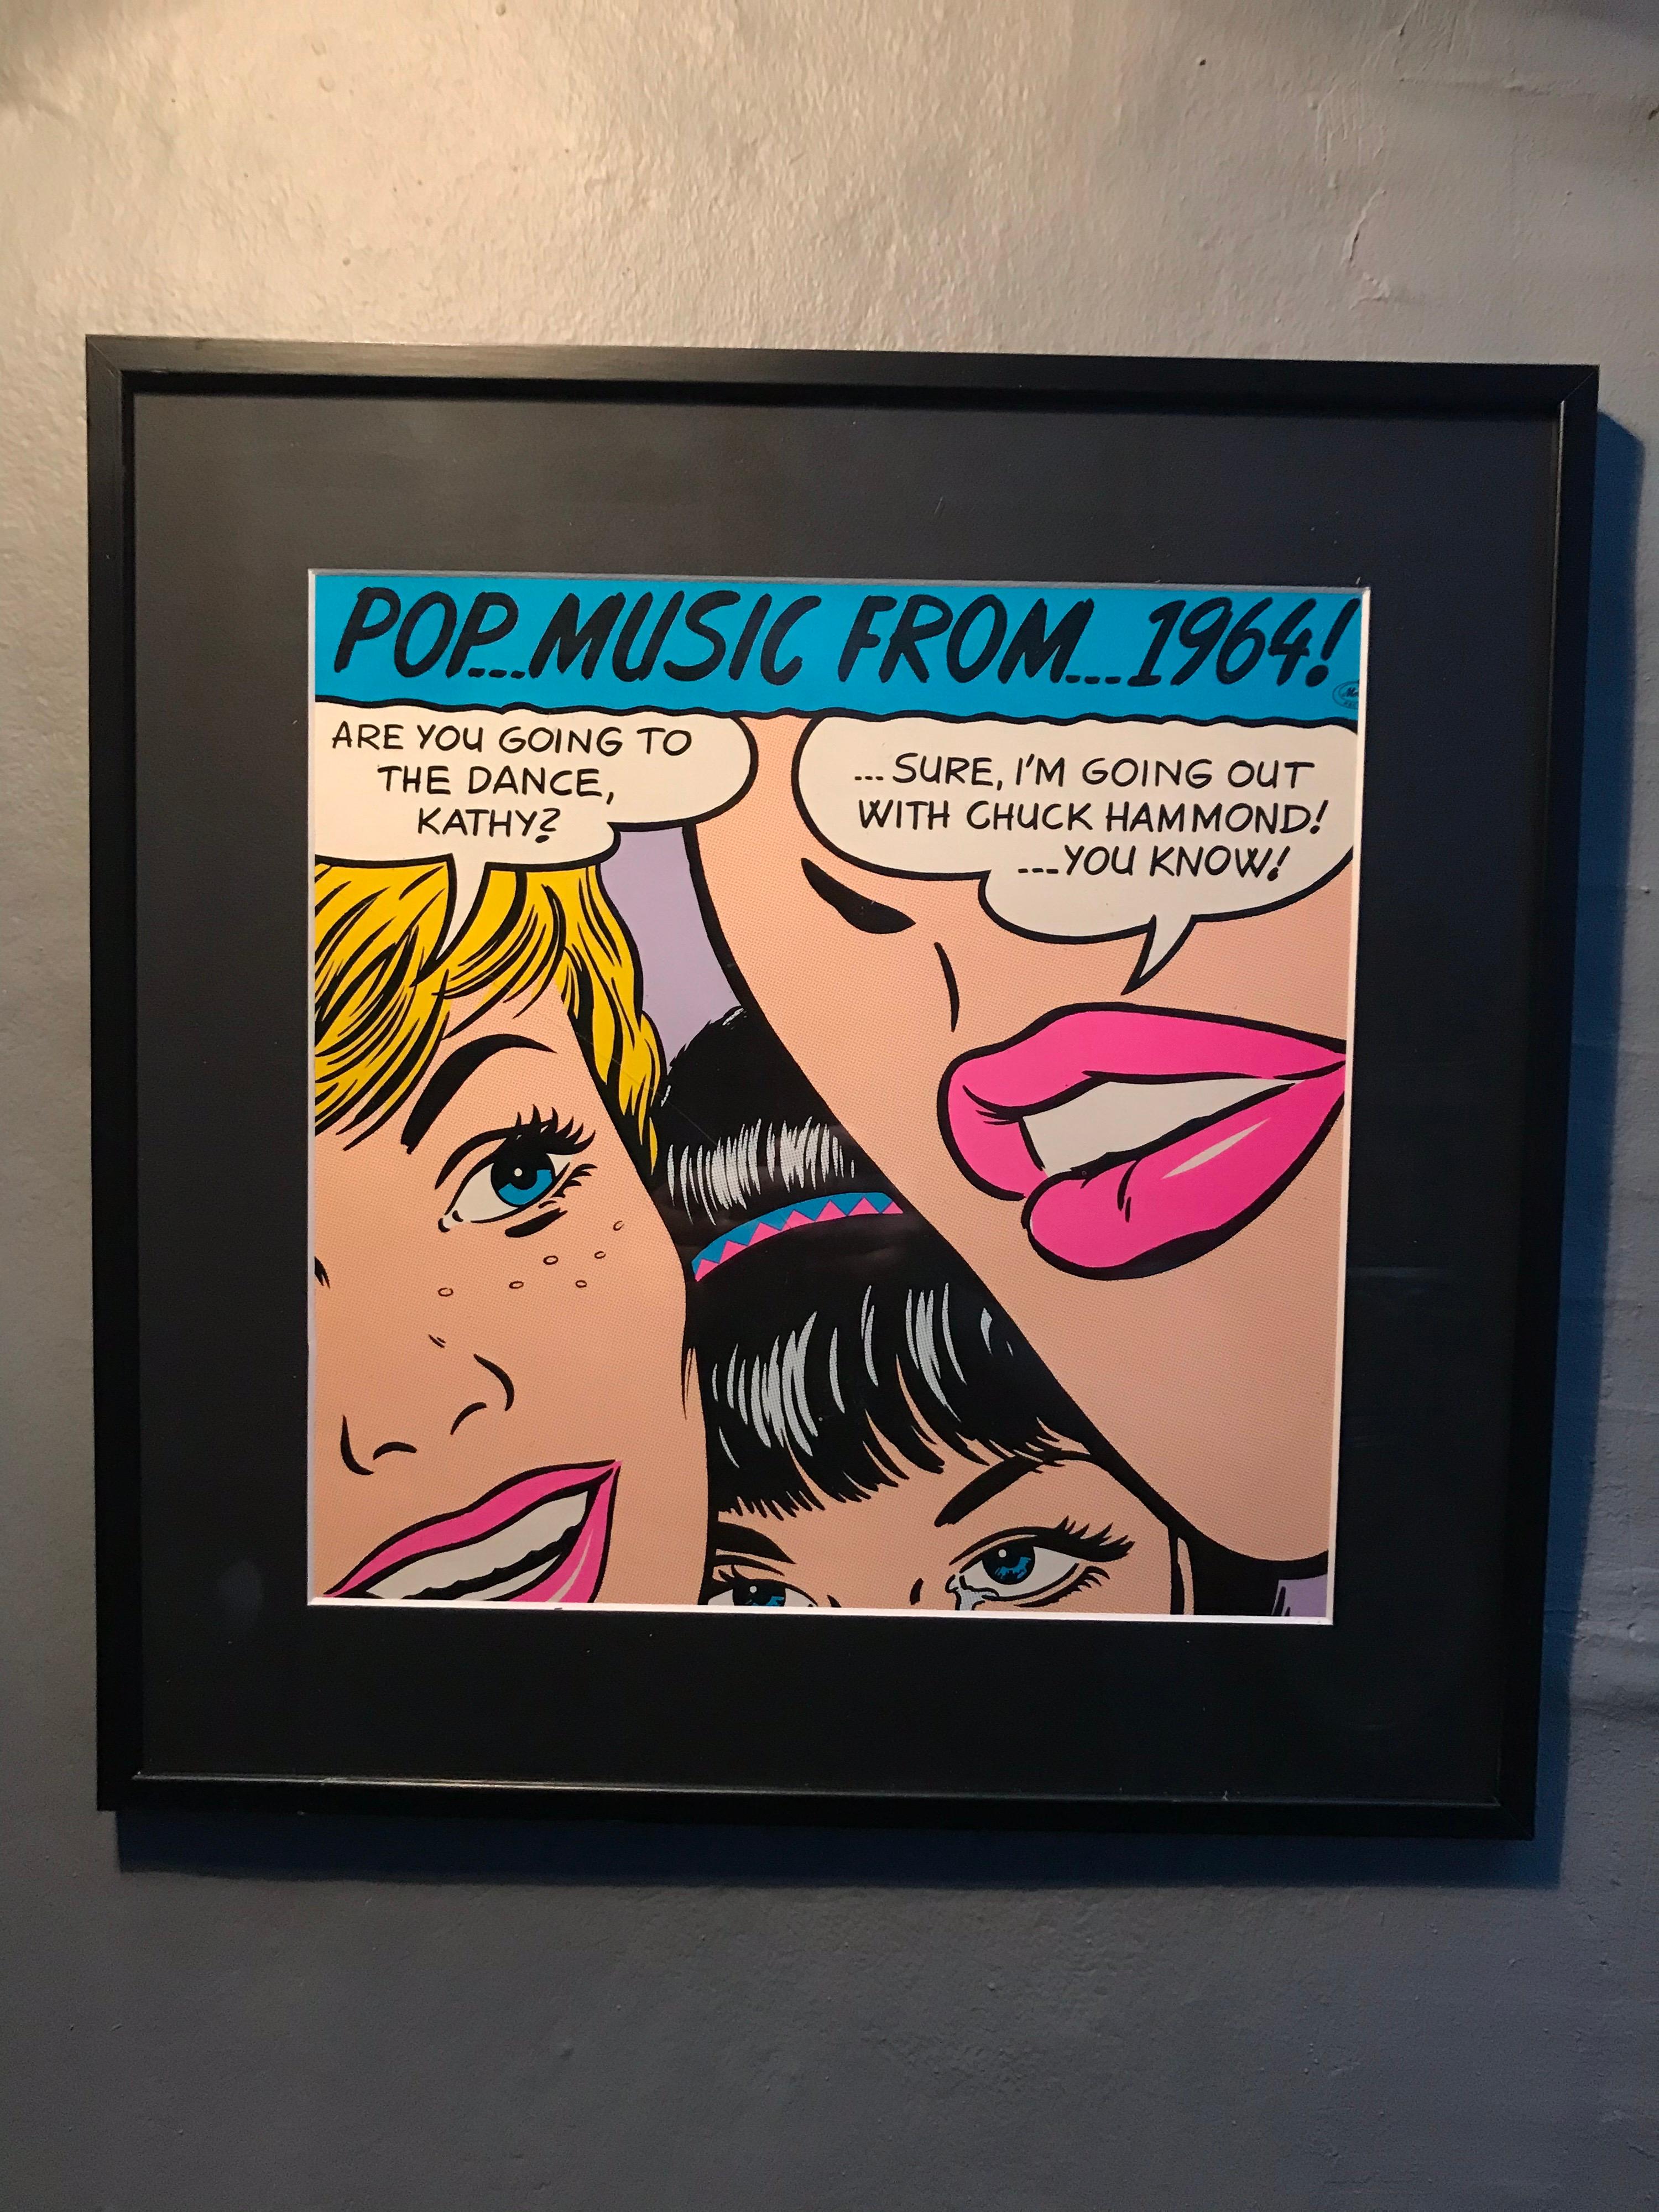 Vintage Set of 10 Framed Pop Music from 1960-1969 Pop Art Lp Covers In Good Condition For Sale In Søborg, DK